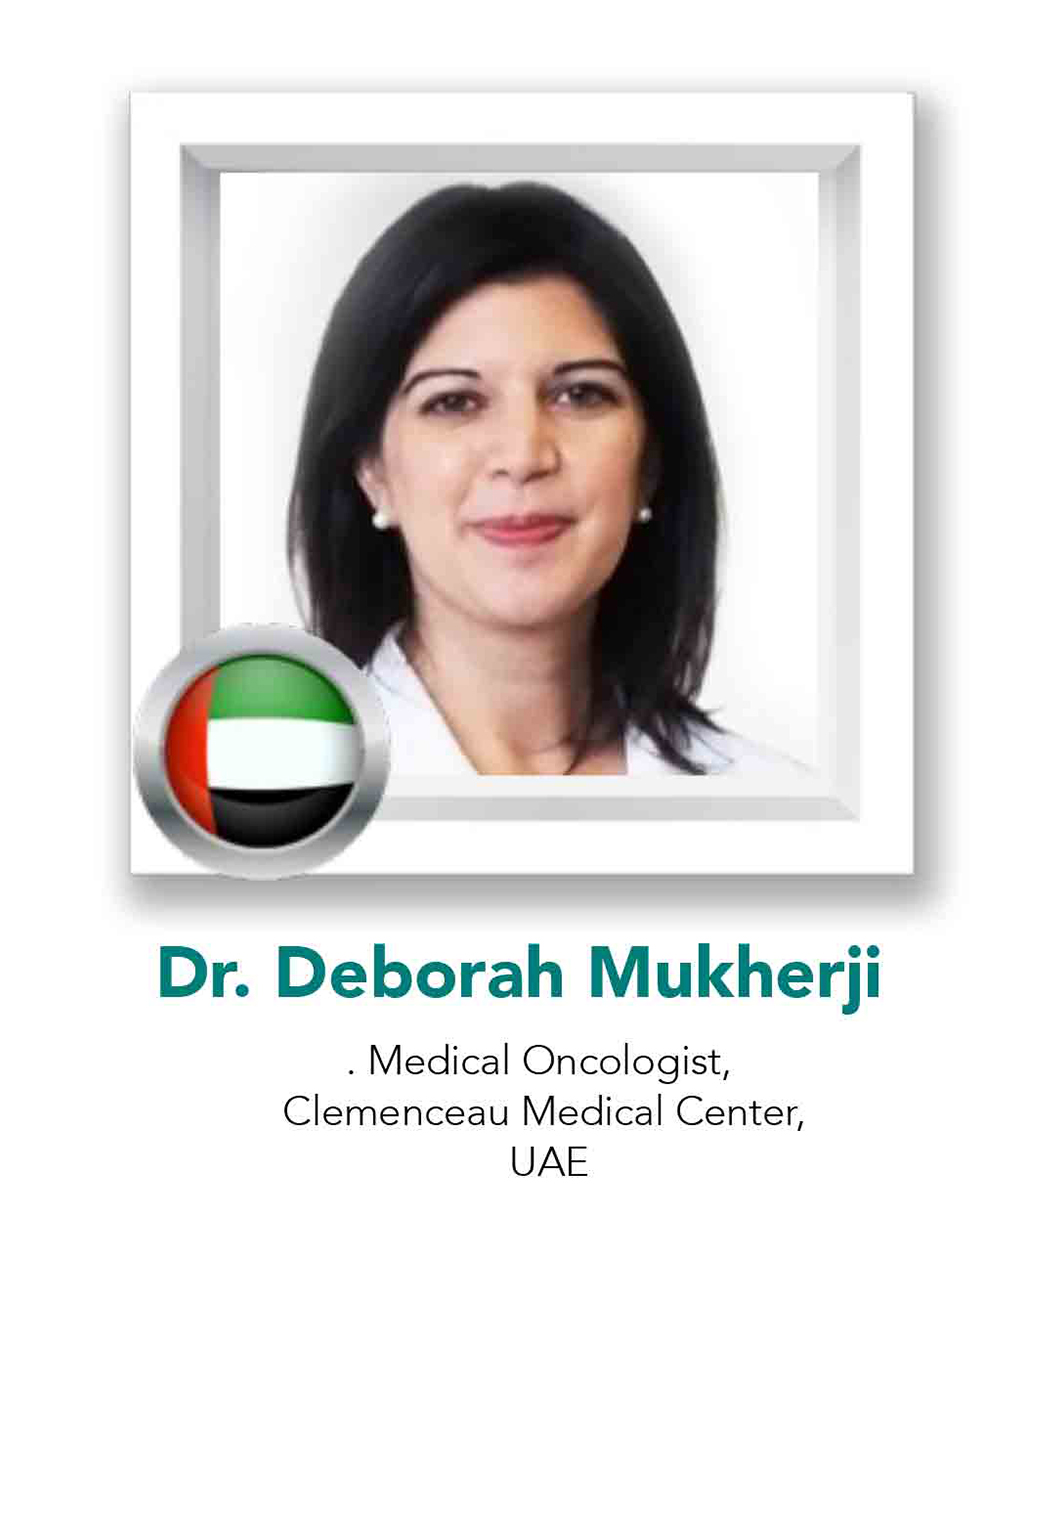 Dr. Deborah Mukherji